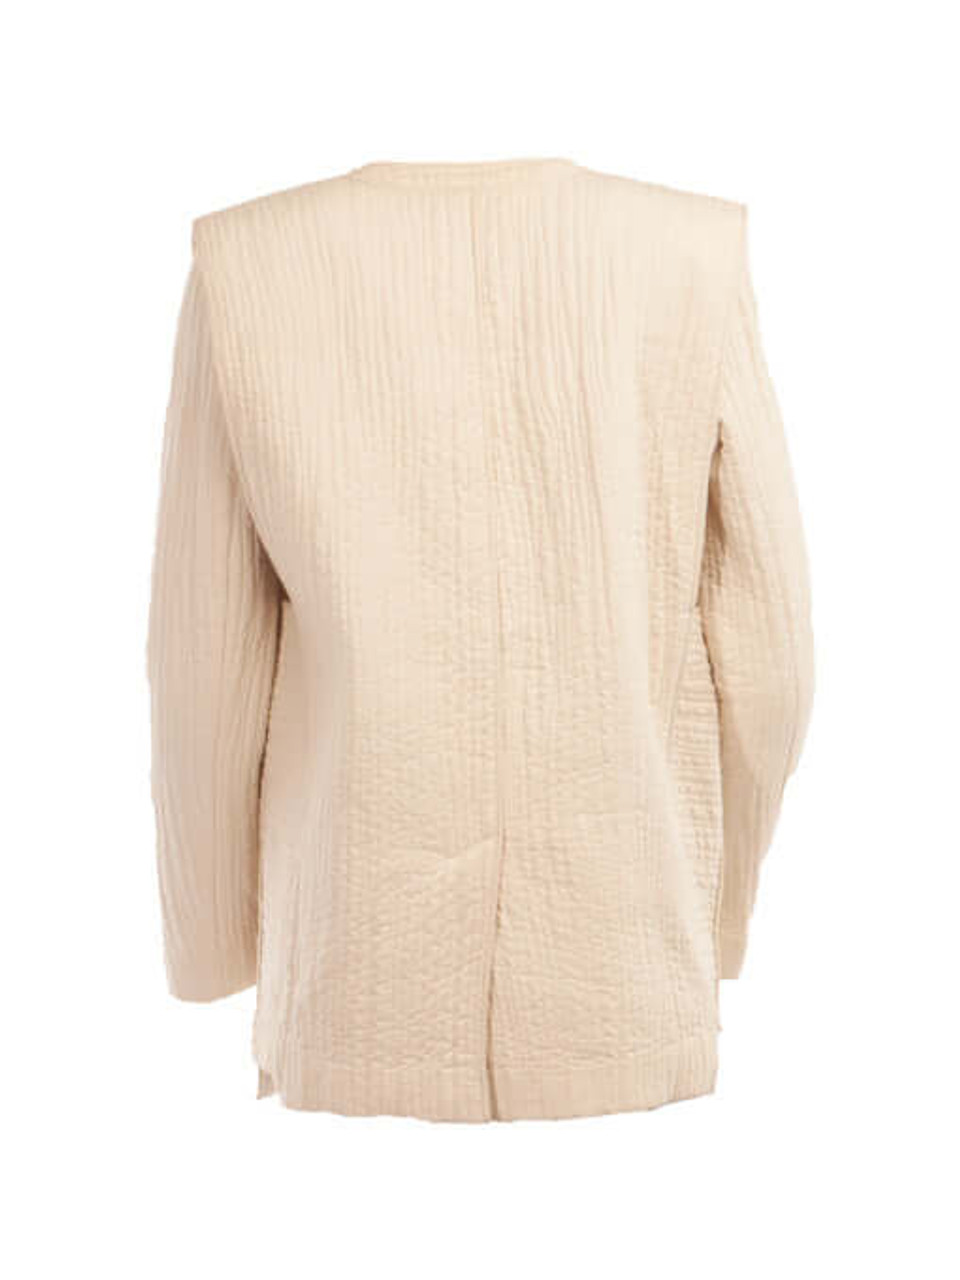 Women Isabel Marant Quilted Jacket - Beige Size M UK 10 US 6 FR 38